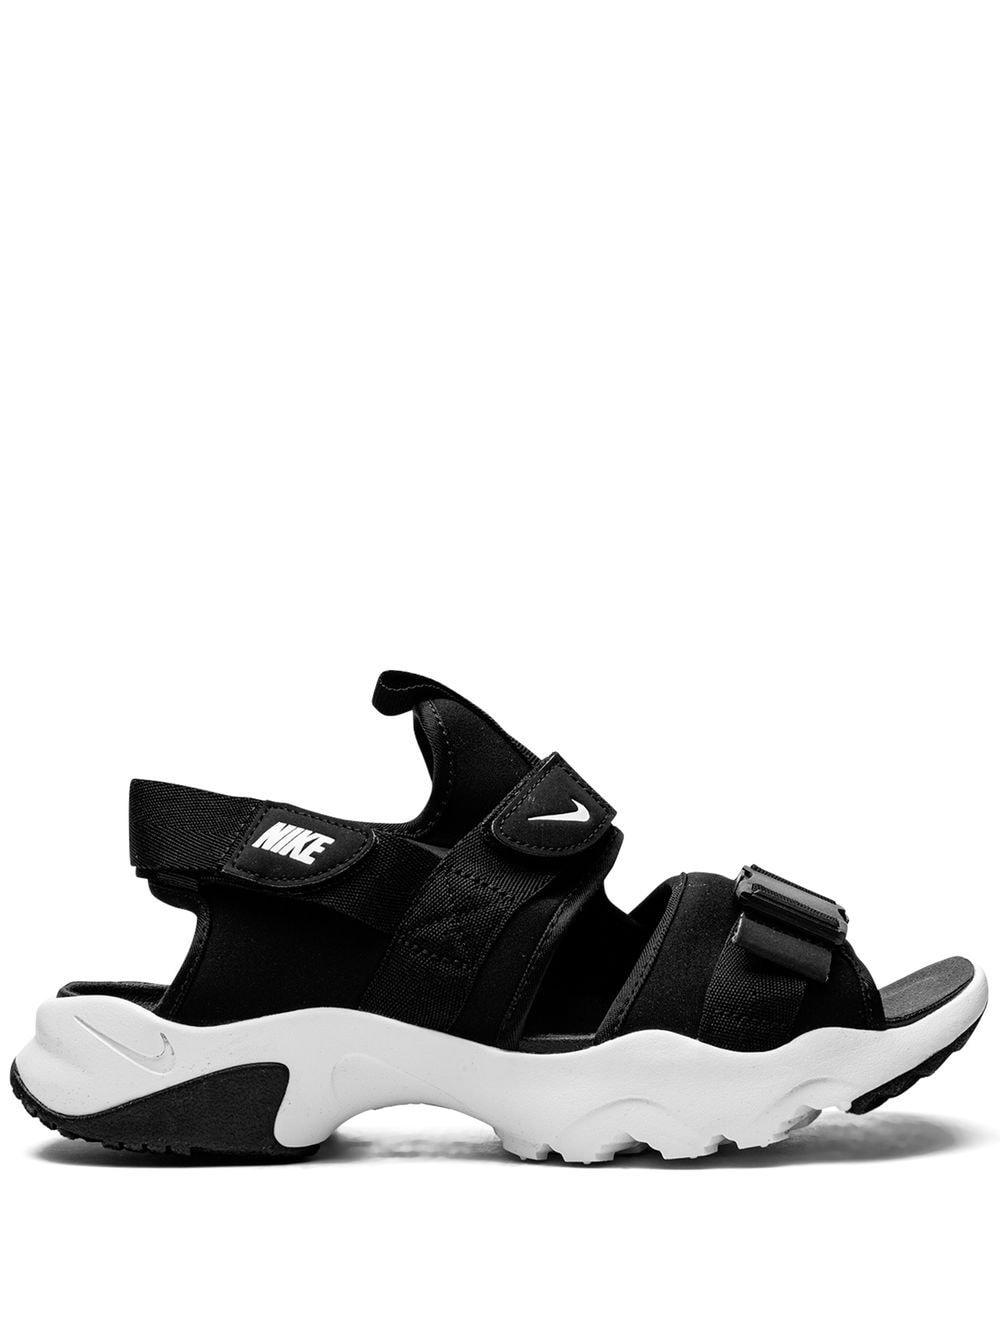 Nike Canyon "black/white" Sandals for Men | Lyst